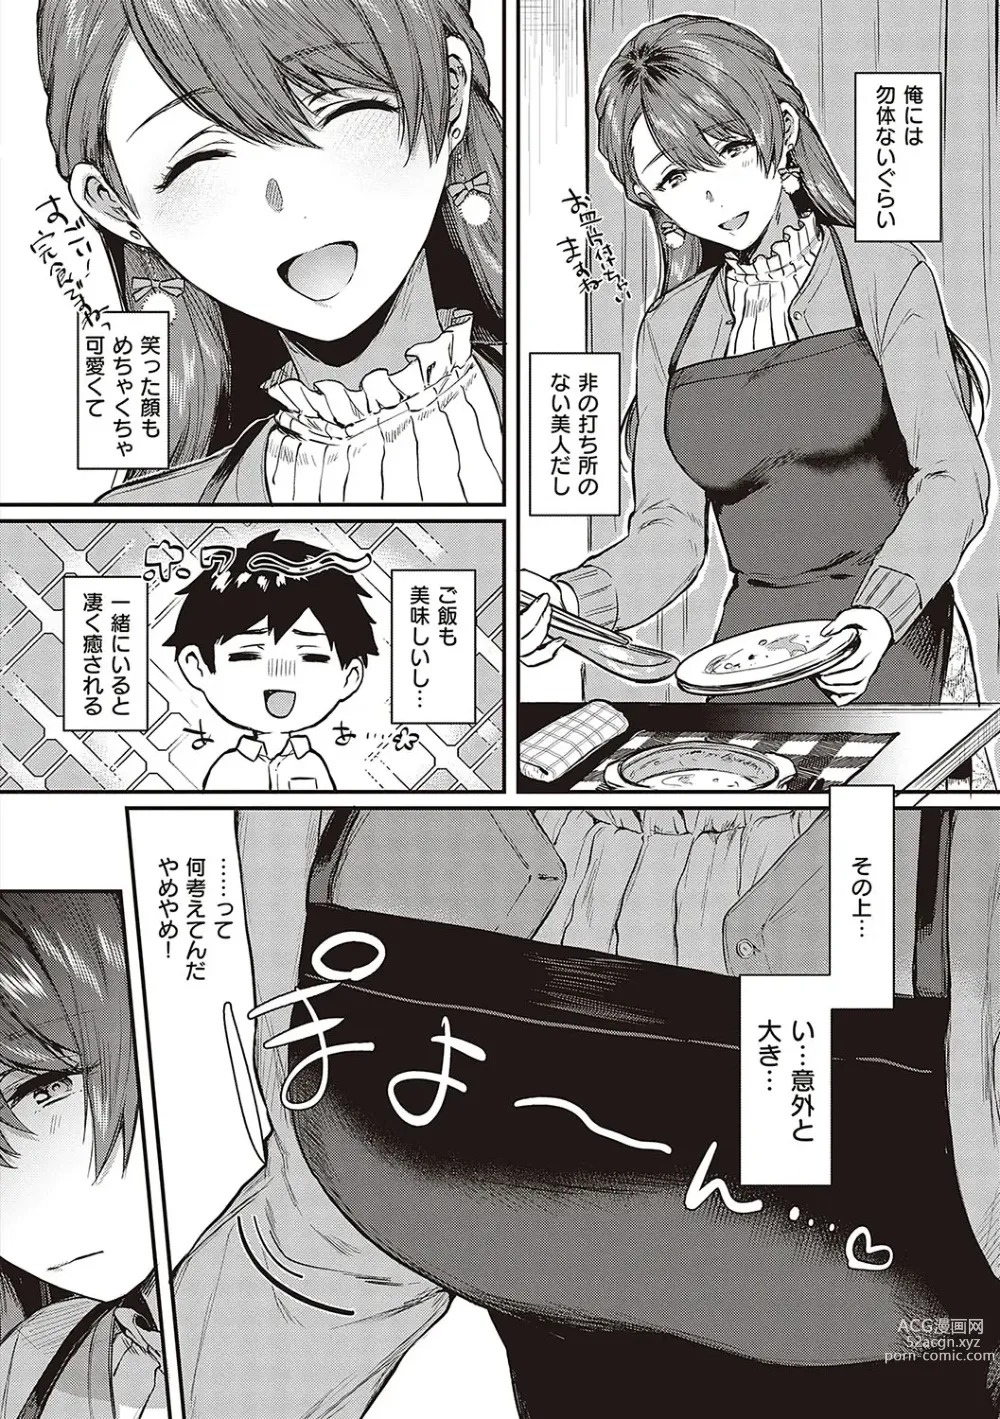 Page 9 of manga Kedamono Inmoralism - The Beastly Immoralism